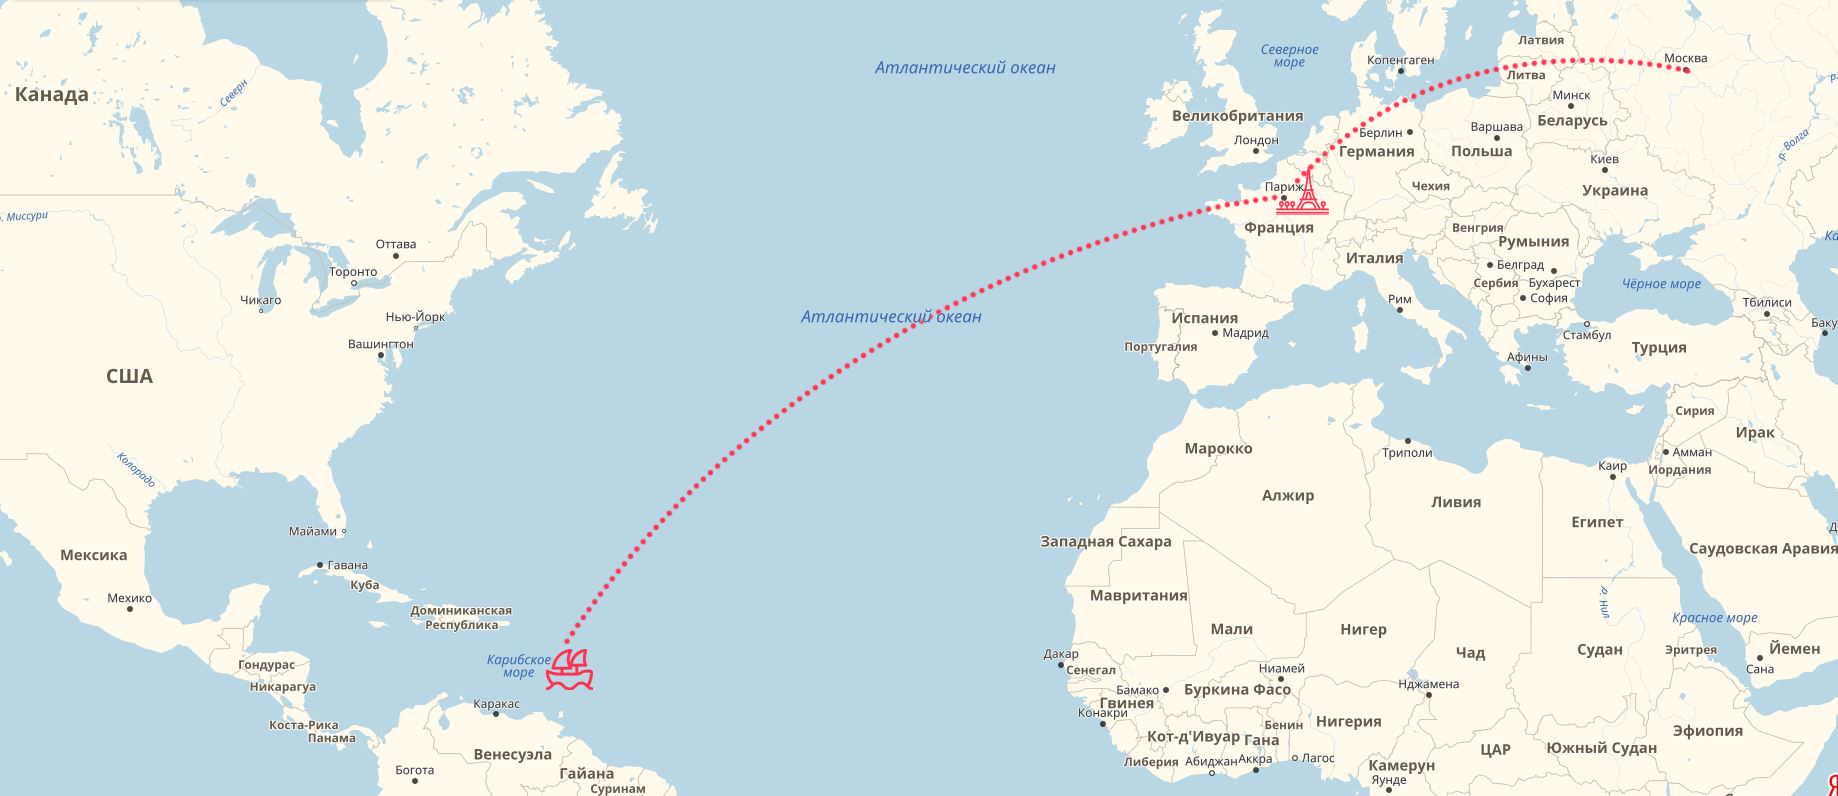 Сколько по времени лететь до кубы. Маршрут Москва Куба на самолете на карте. Перелет Москва Стамбул на карте. Москва Куба. Маршрут самолета Стамбул-Богота на карте.